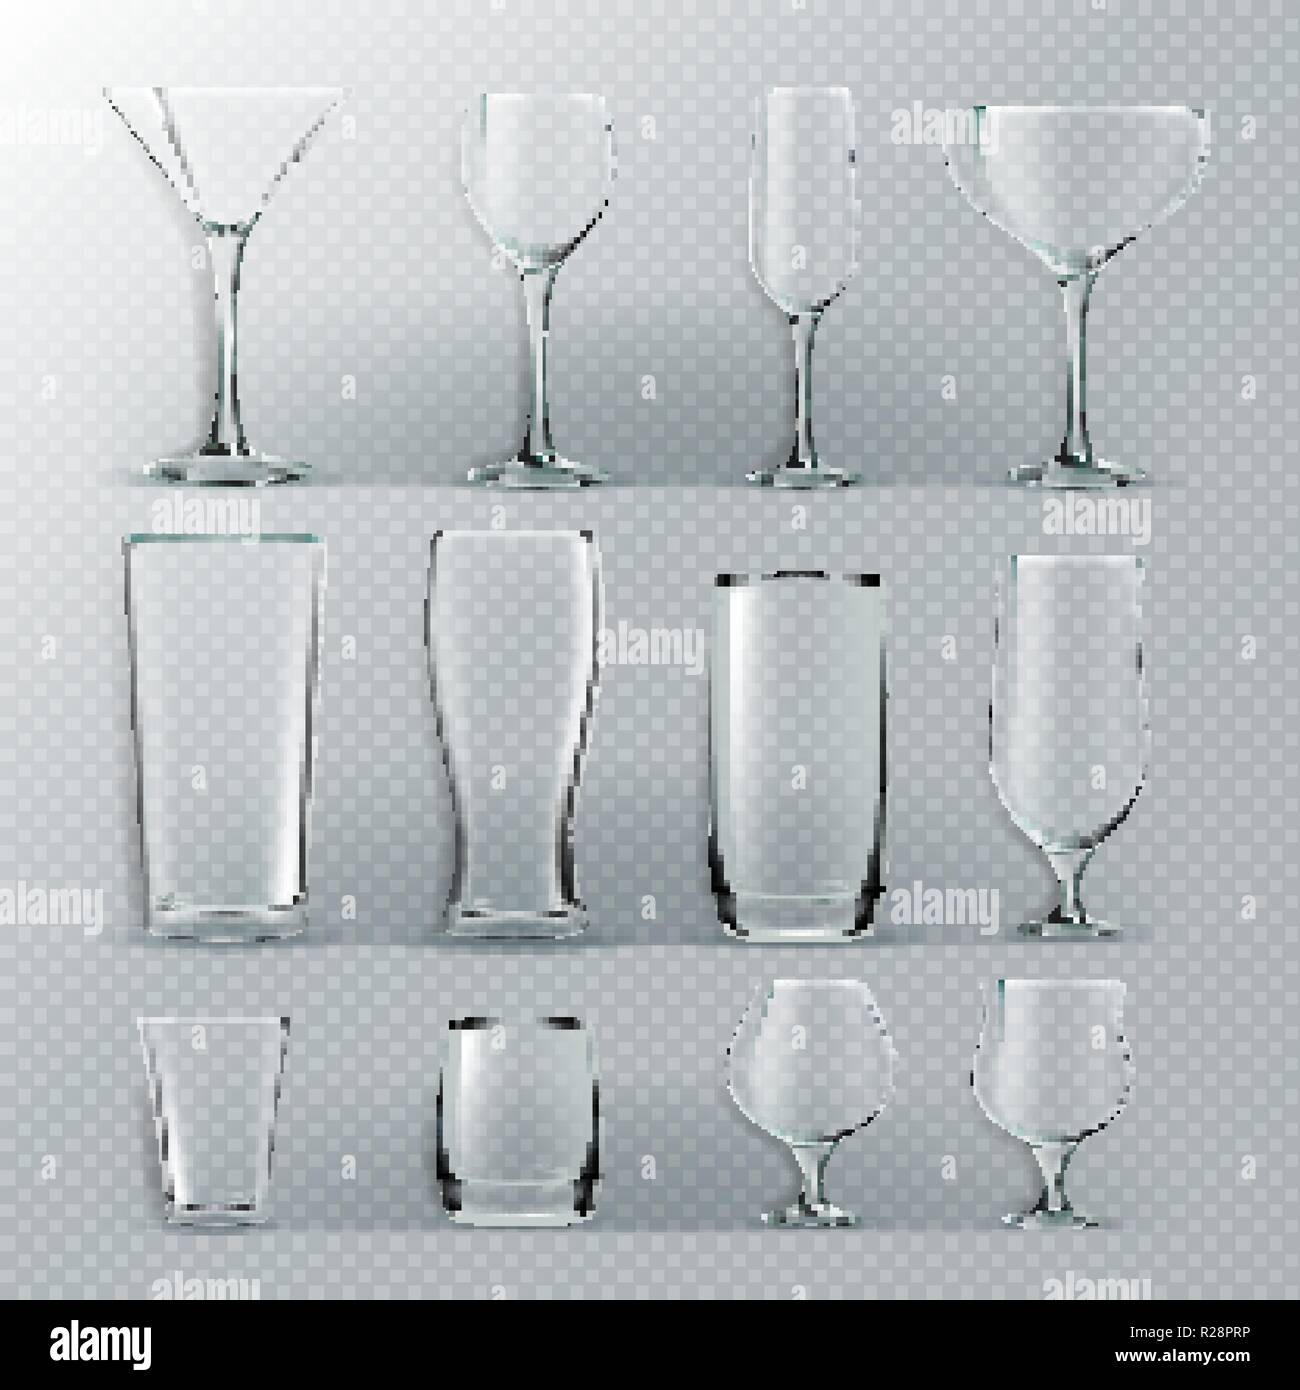 https://c8.alamy.com/comp/R28PRP/transparent-glass-set-vector-transparent-empty-glasses-goblets-for-water-alcohol-juice-cocktail-drink-realistic-bright-illustration-R28PRP.jpg